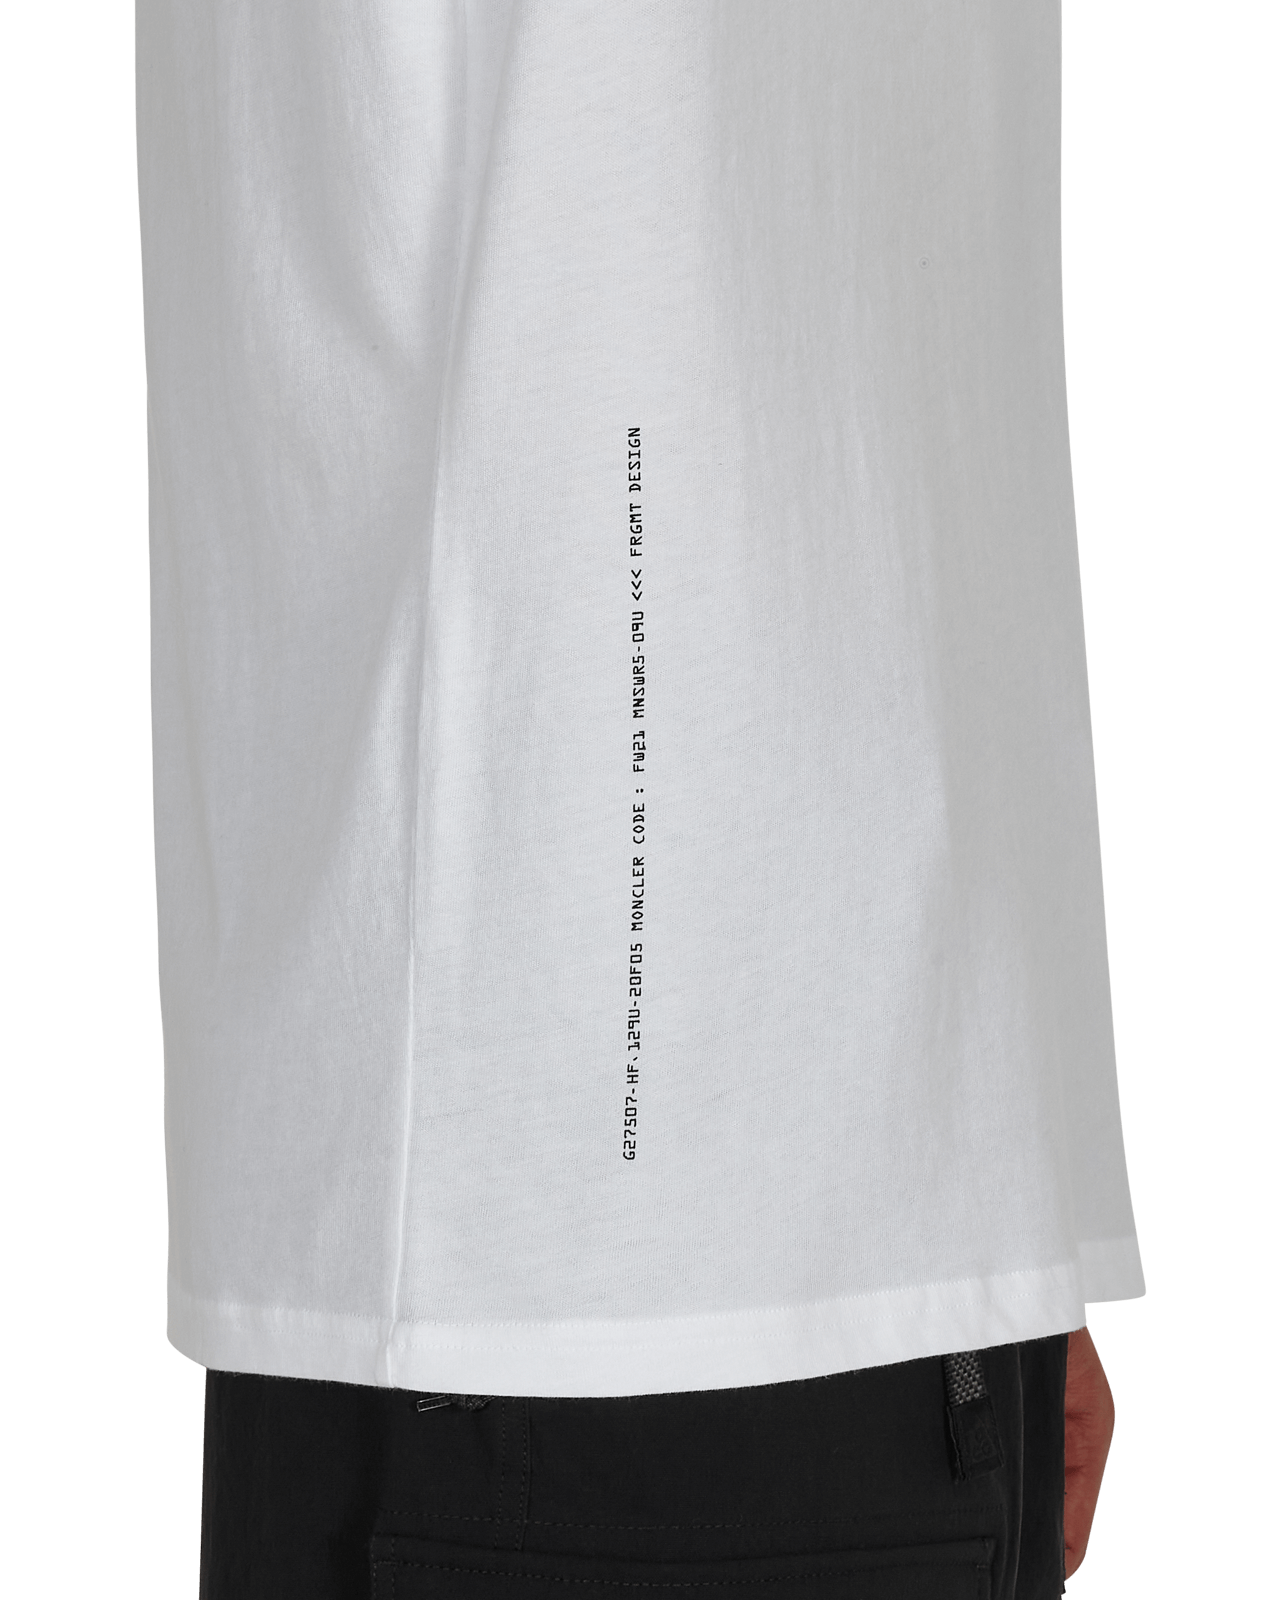 Moncler Genius Fragment T-Shirt White T-Shirts Shortsleeve G209U8C00008 001